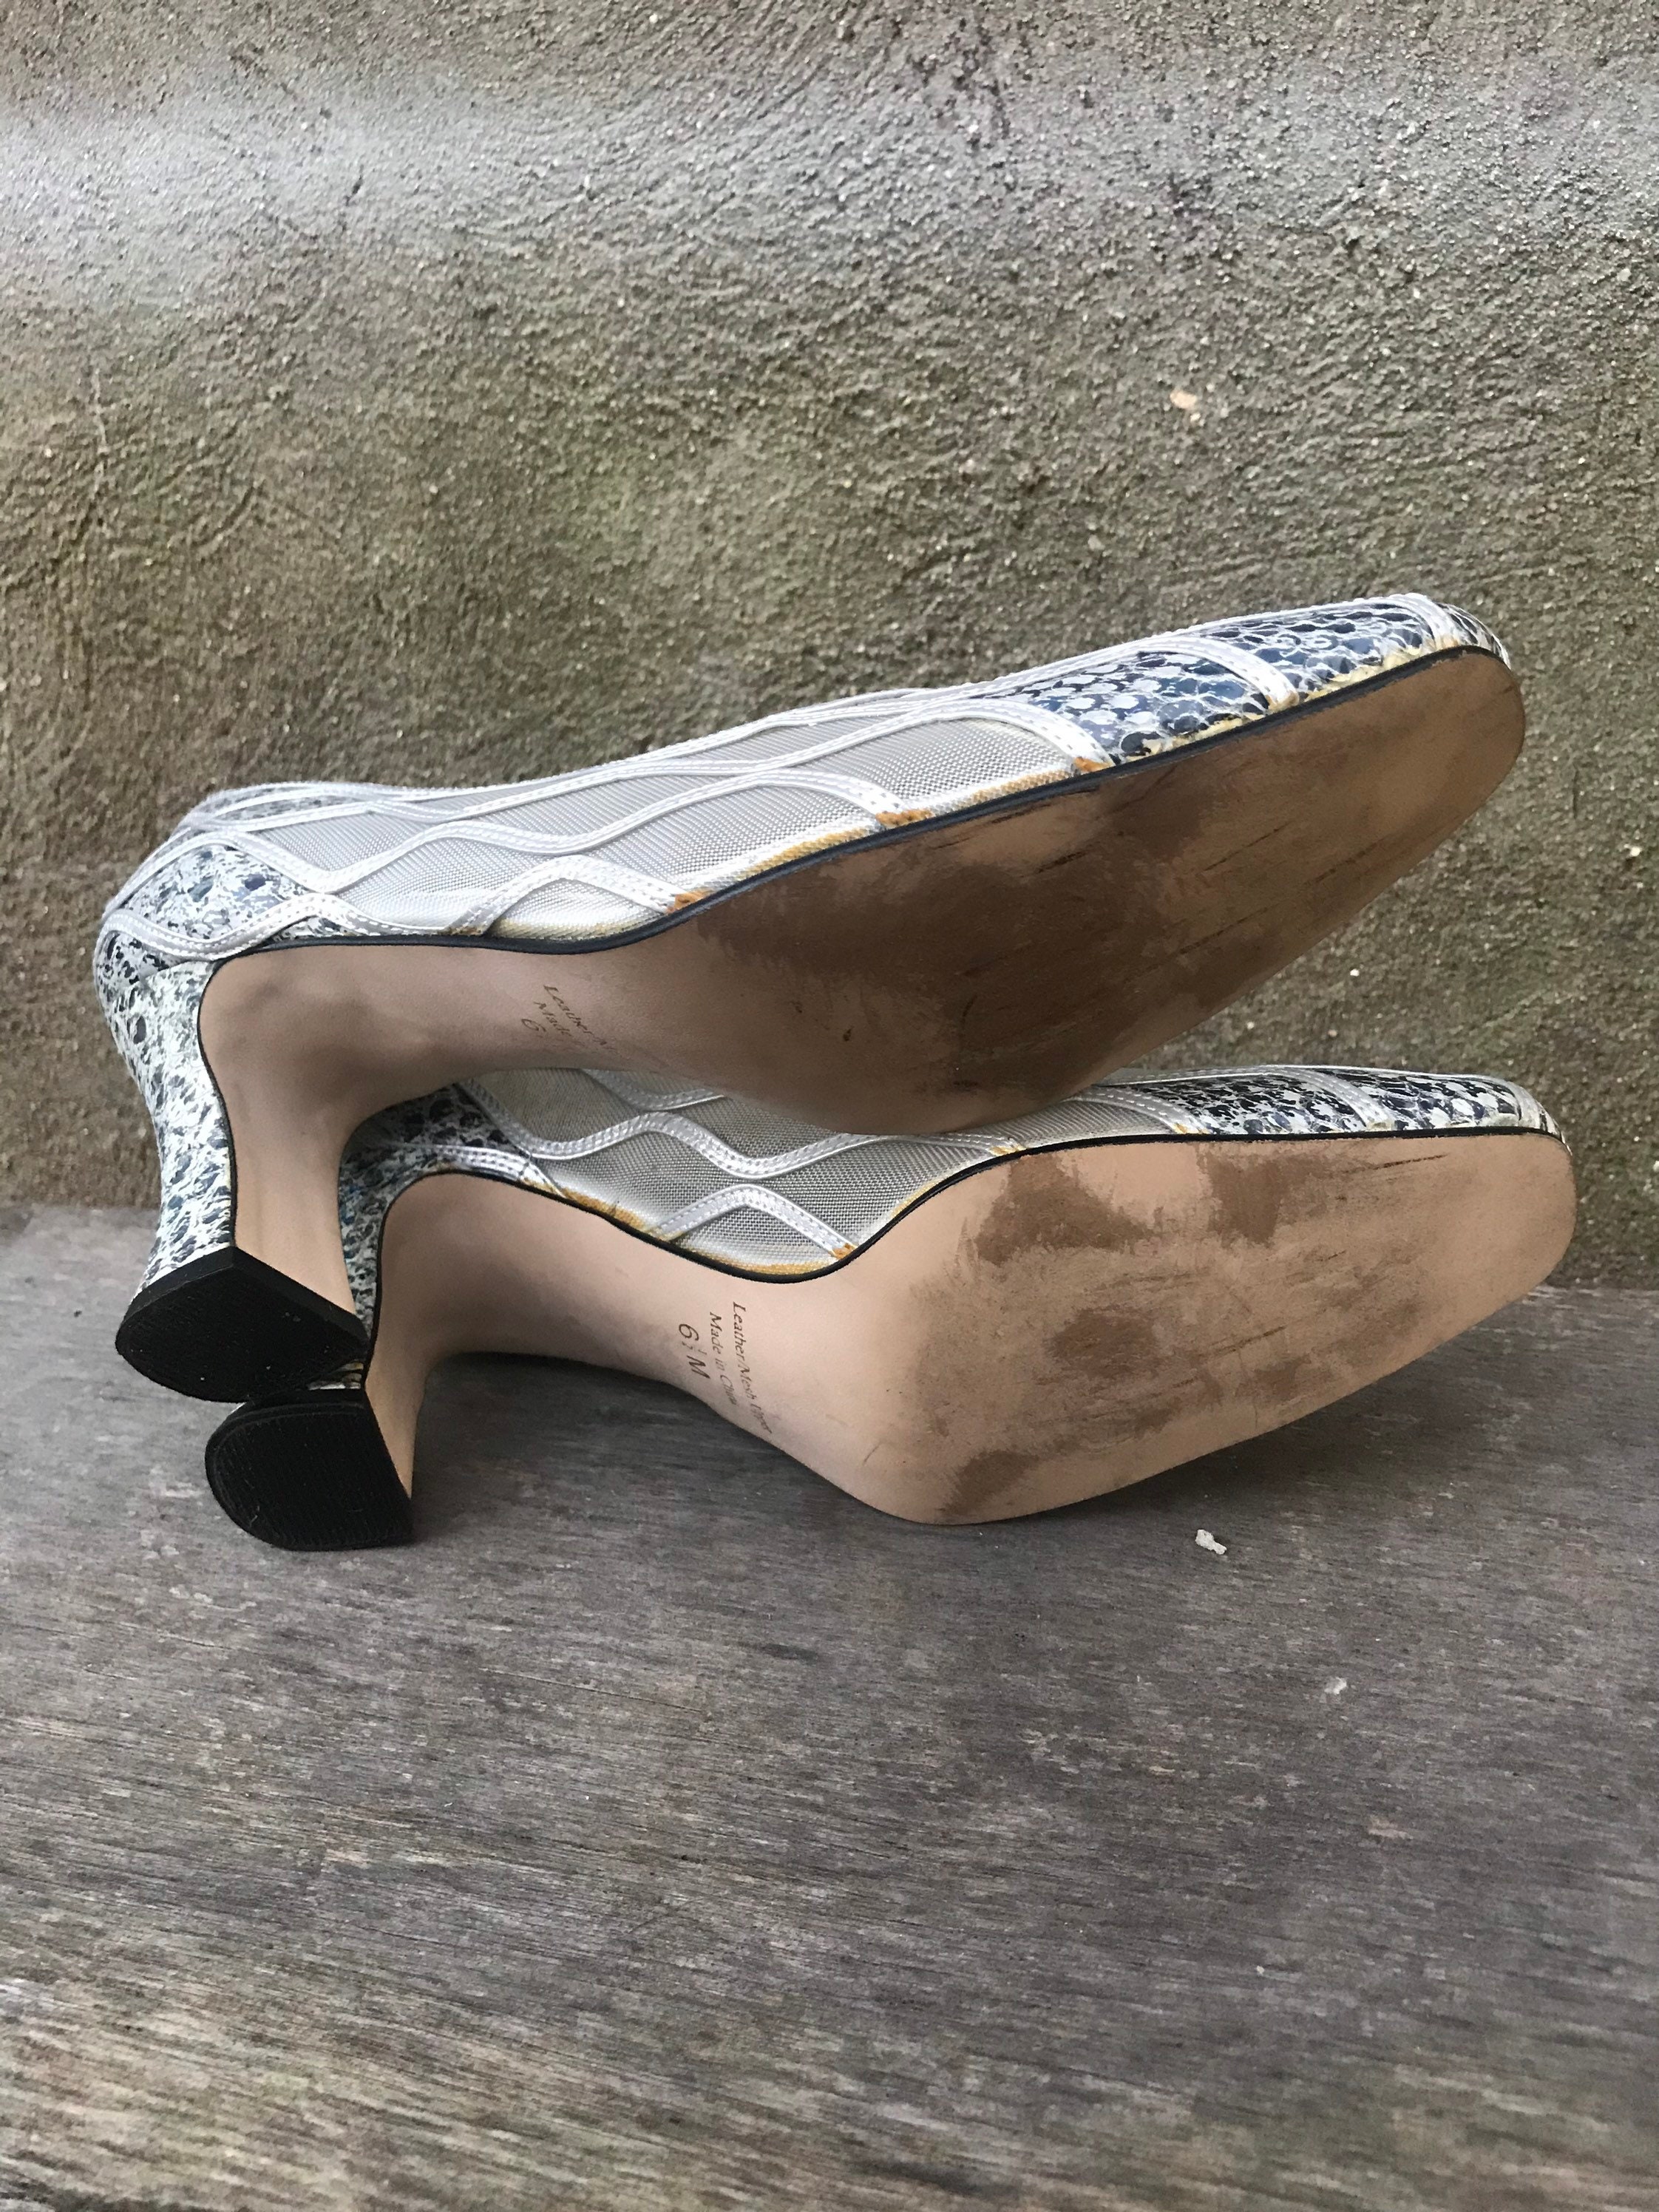 Sofia Gray Snake Skin Leather Stiletto High Heels Pumps Shoes – AUMI 4